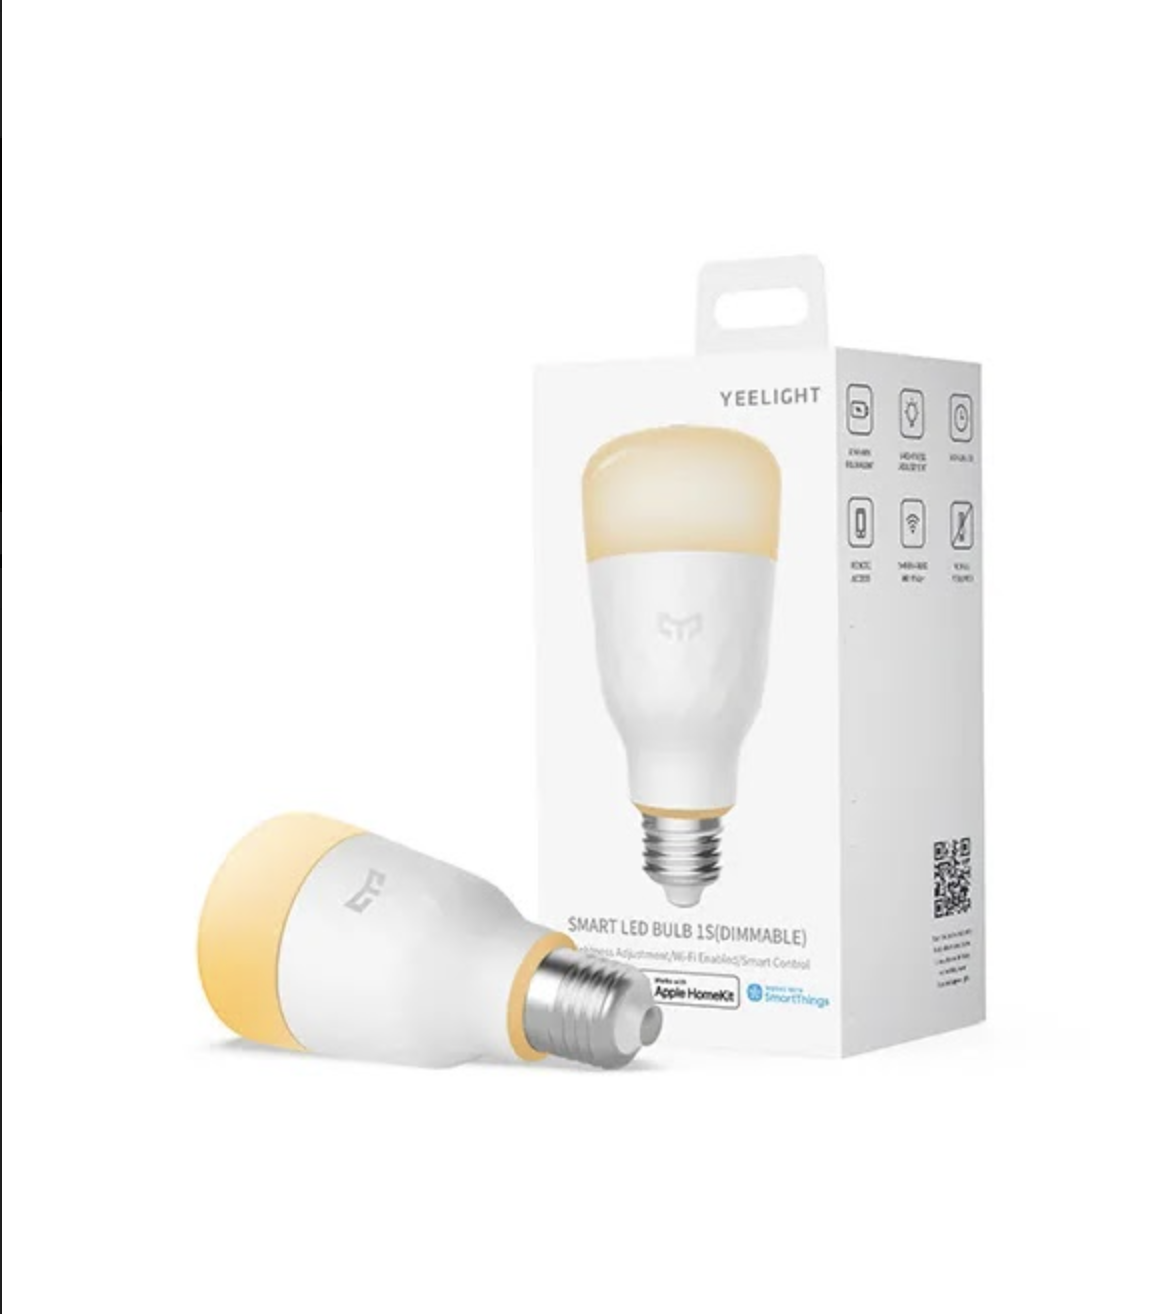 5-Pack, YEELIGHT Smart LED Bulb 1S, Support Apple HomeKit, Alexa, Google Home, IFTTT, 800 lumen A19 Dimmable Bulb, No hub required, $39.99 FS $39.98